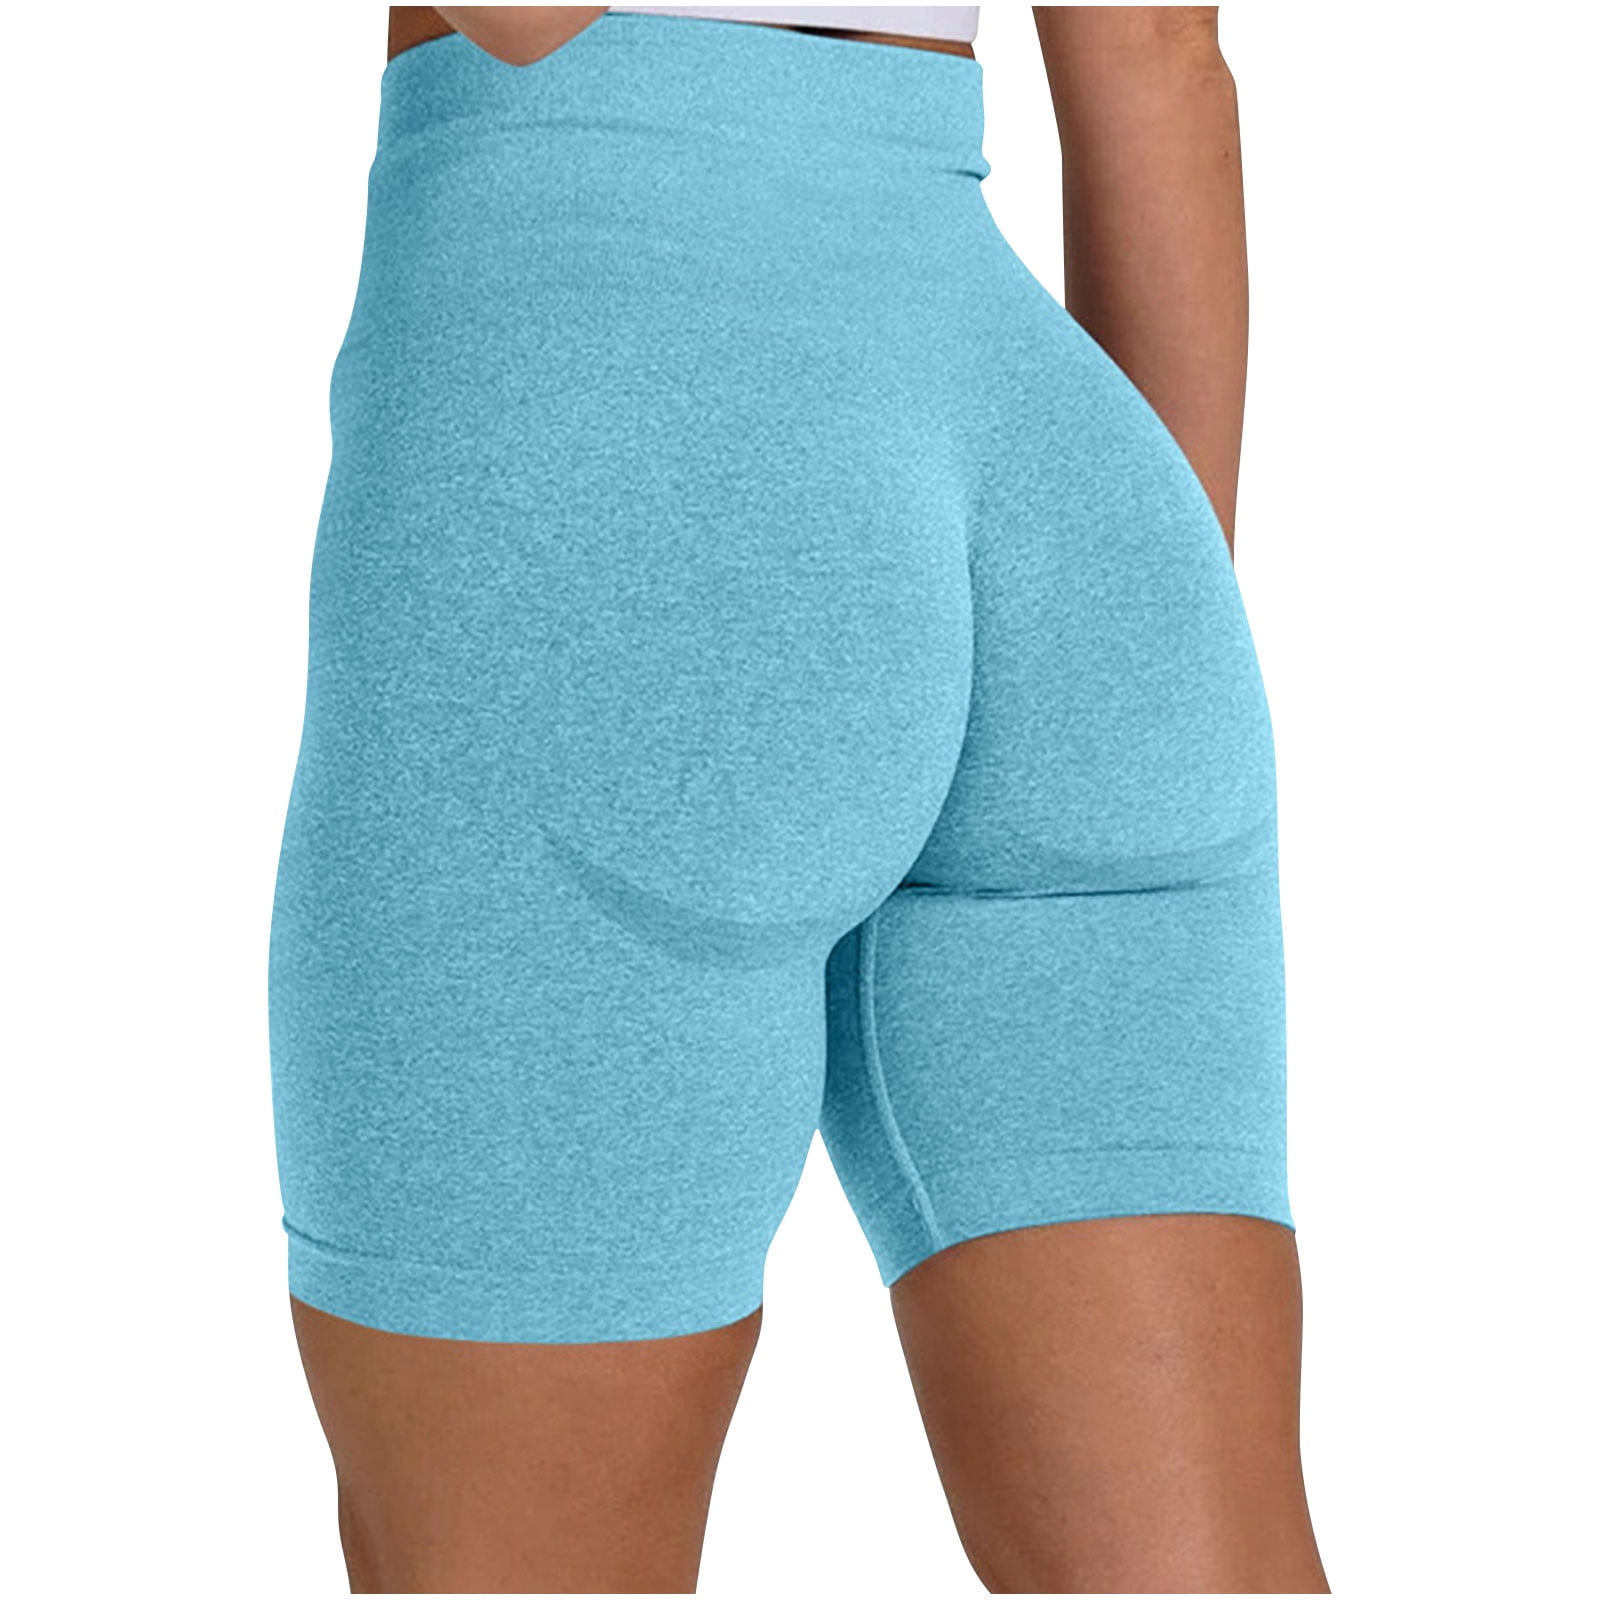 YYDGH Sports Booty Shorts for Women Side Drawstring High Waisted Yoga  Shorts Bubble Textured Scrunch Butt Lifting Hot Short Gray XL